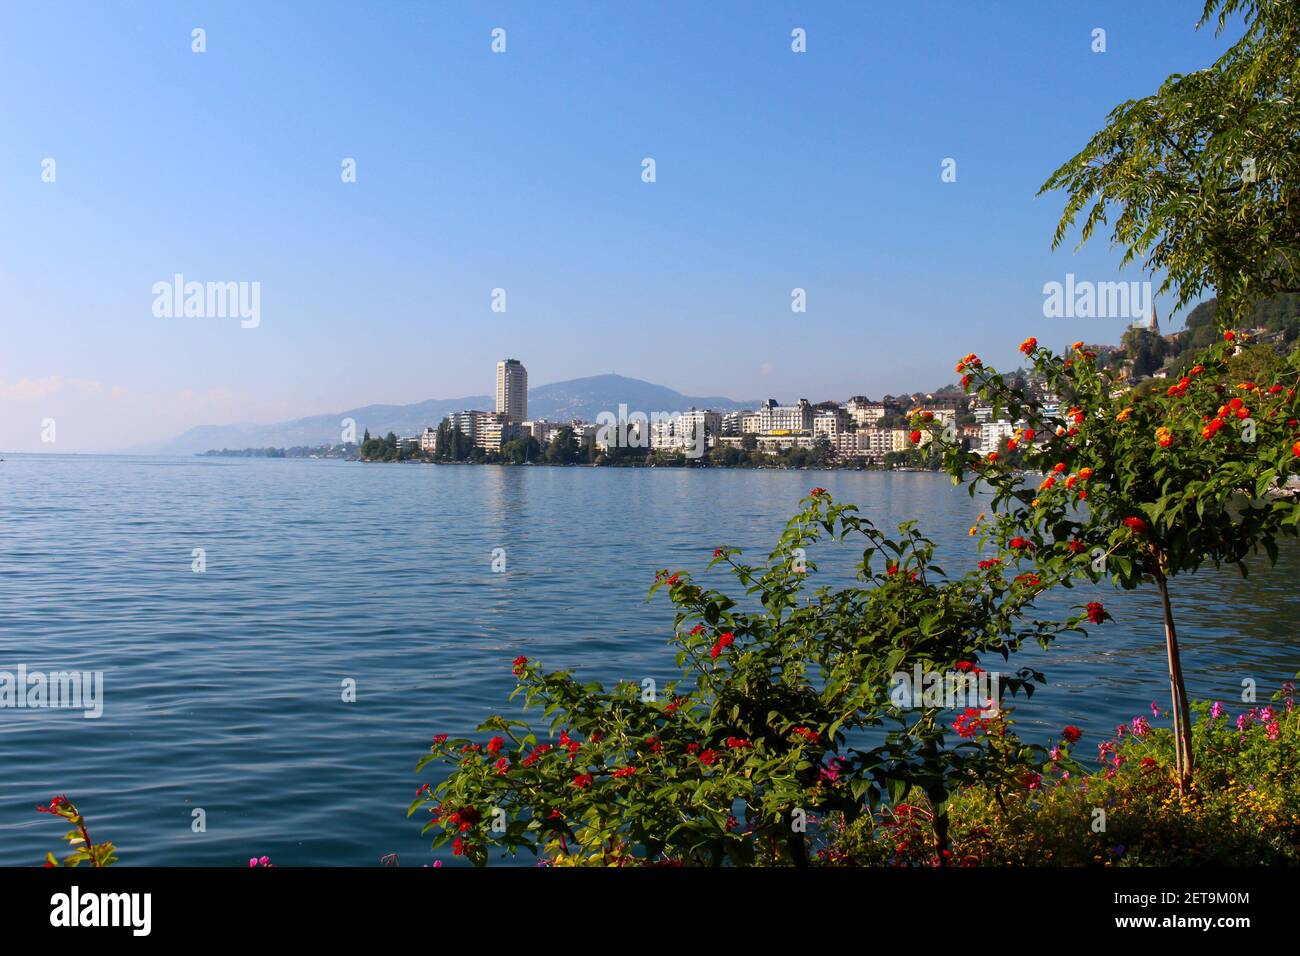 Montreux, Geneva lake Stock Photo